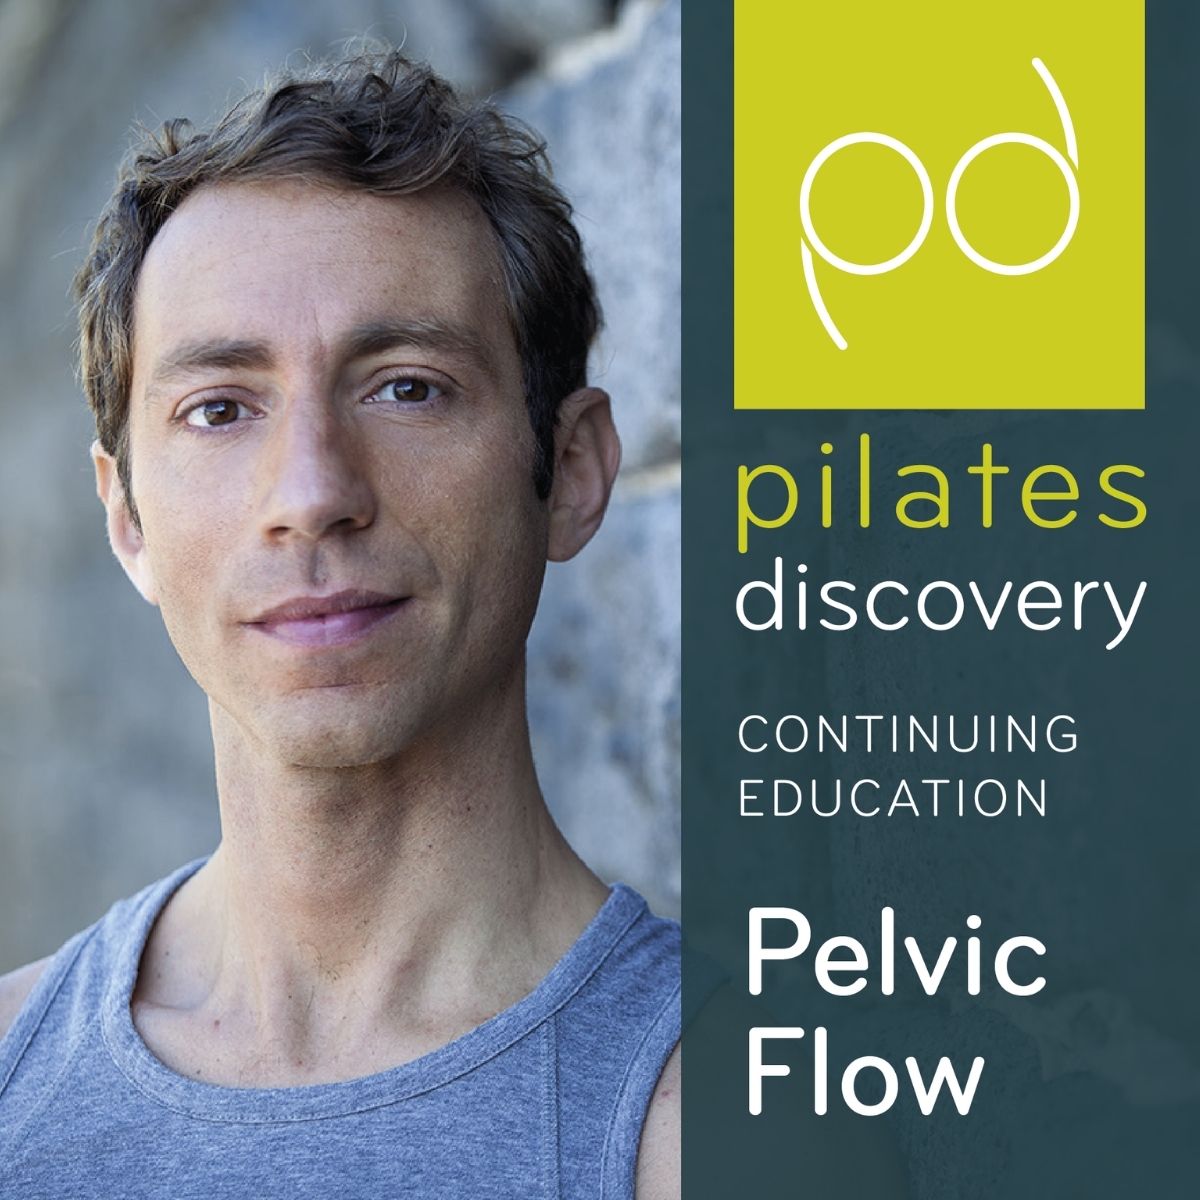 Workshop Pelvic Flow: pavimento pelvico in movimento di Pilates Discovery 